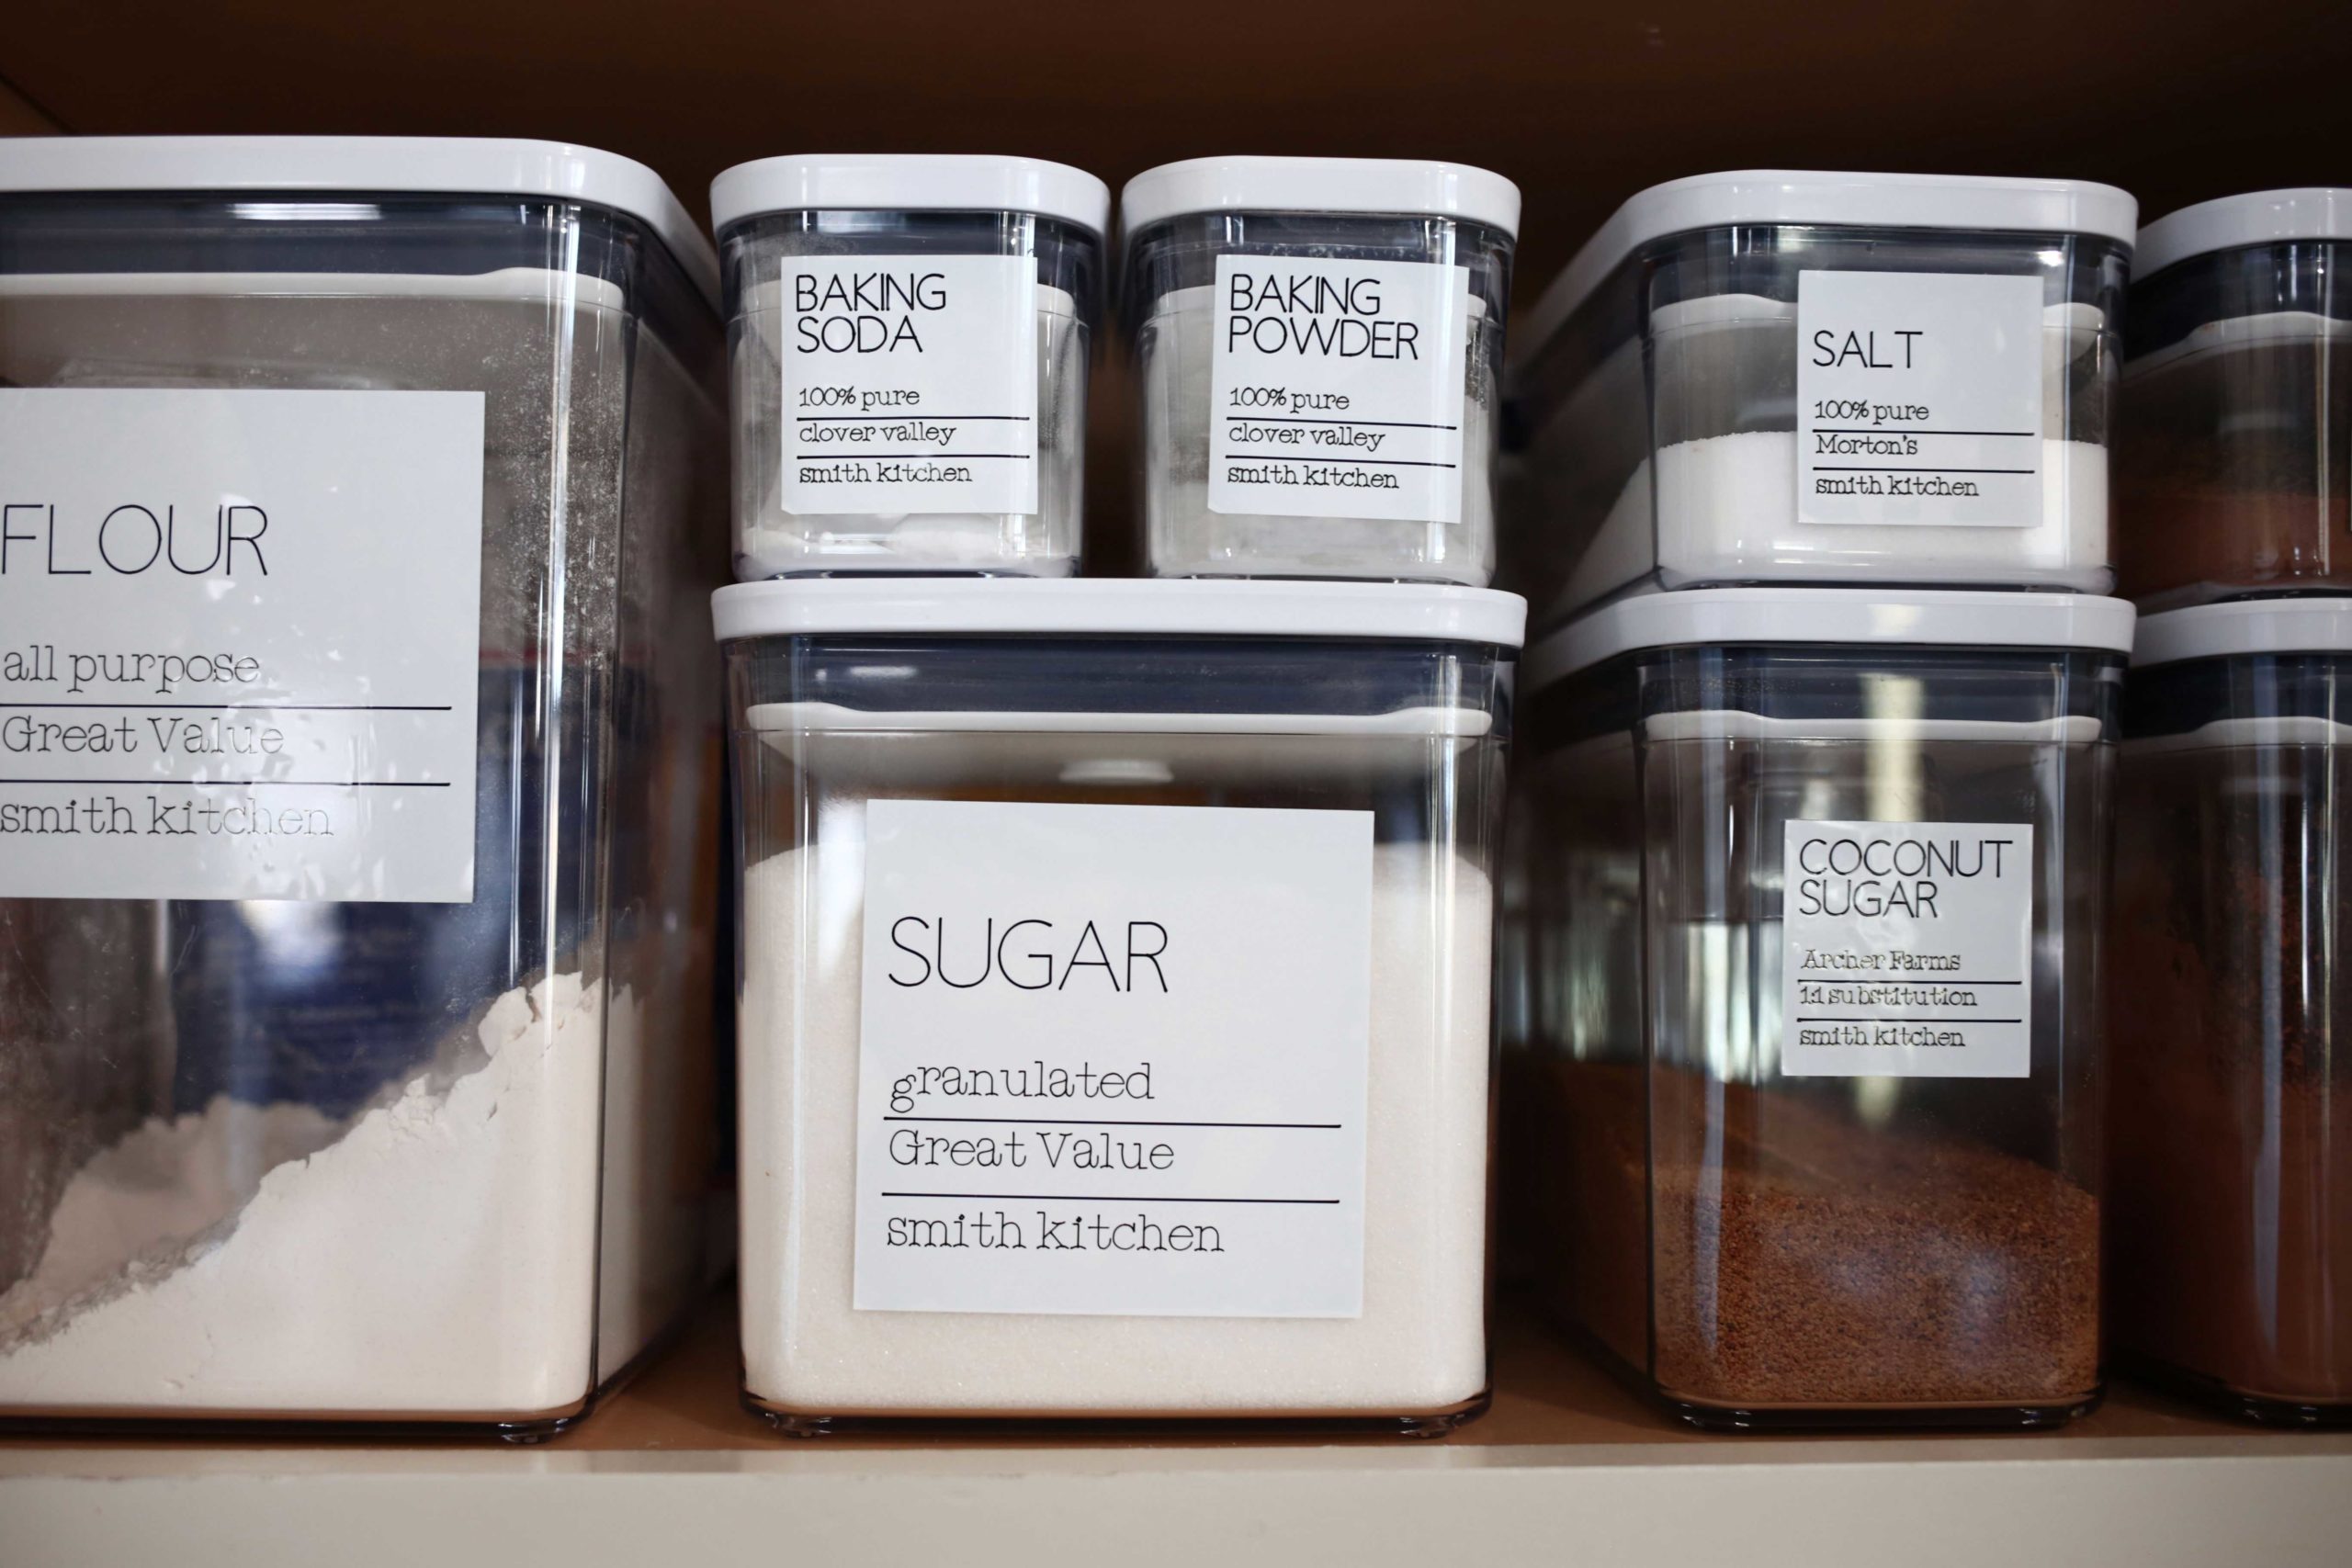 DIY Spice Jar Labels with the Cricut Maker 